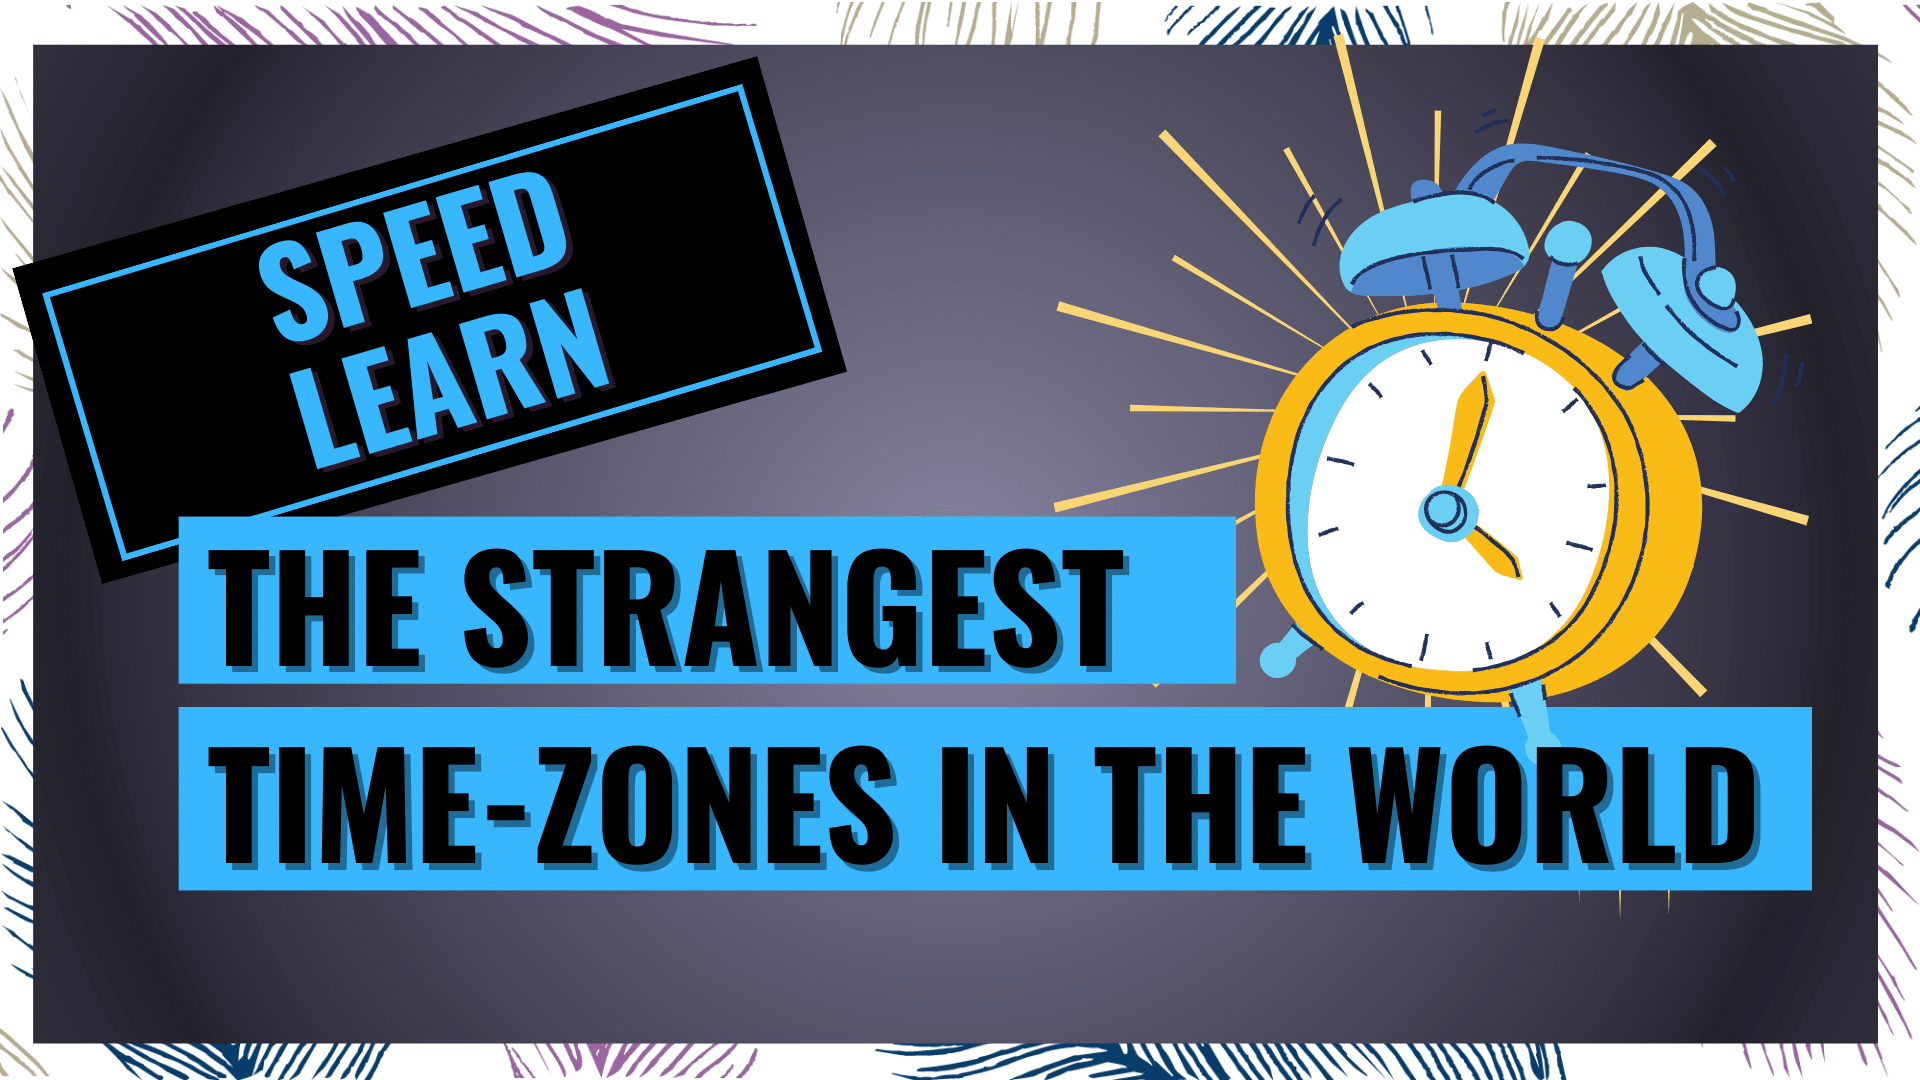 Strangest Time-zones (third party)